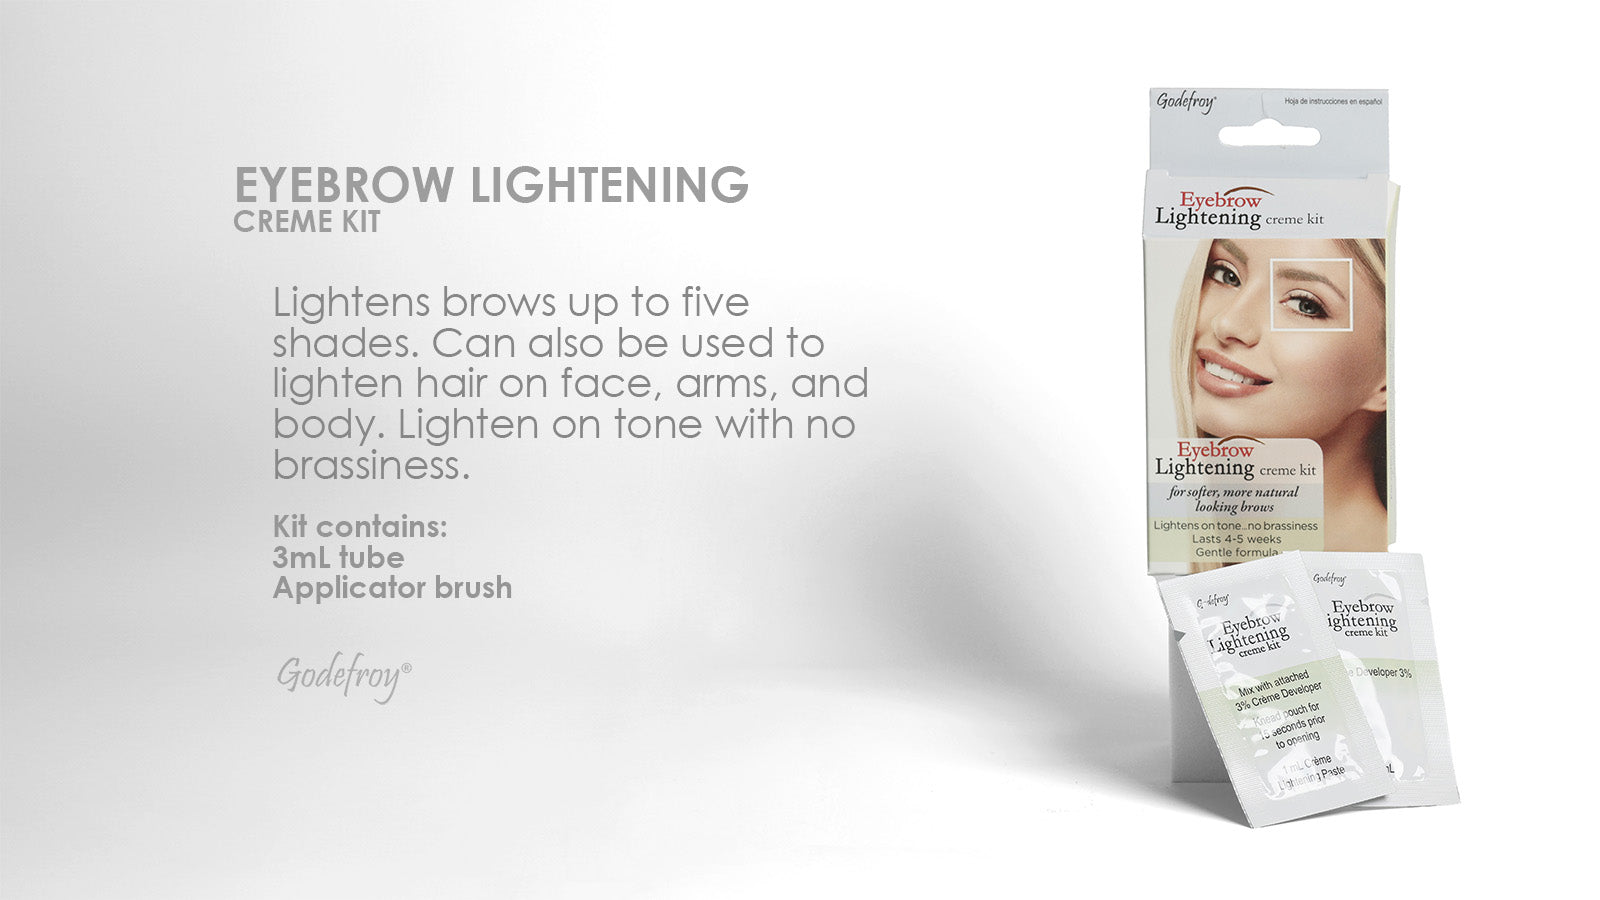 eyebrow lightening creme kit product information